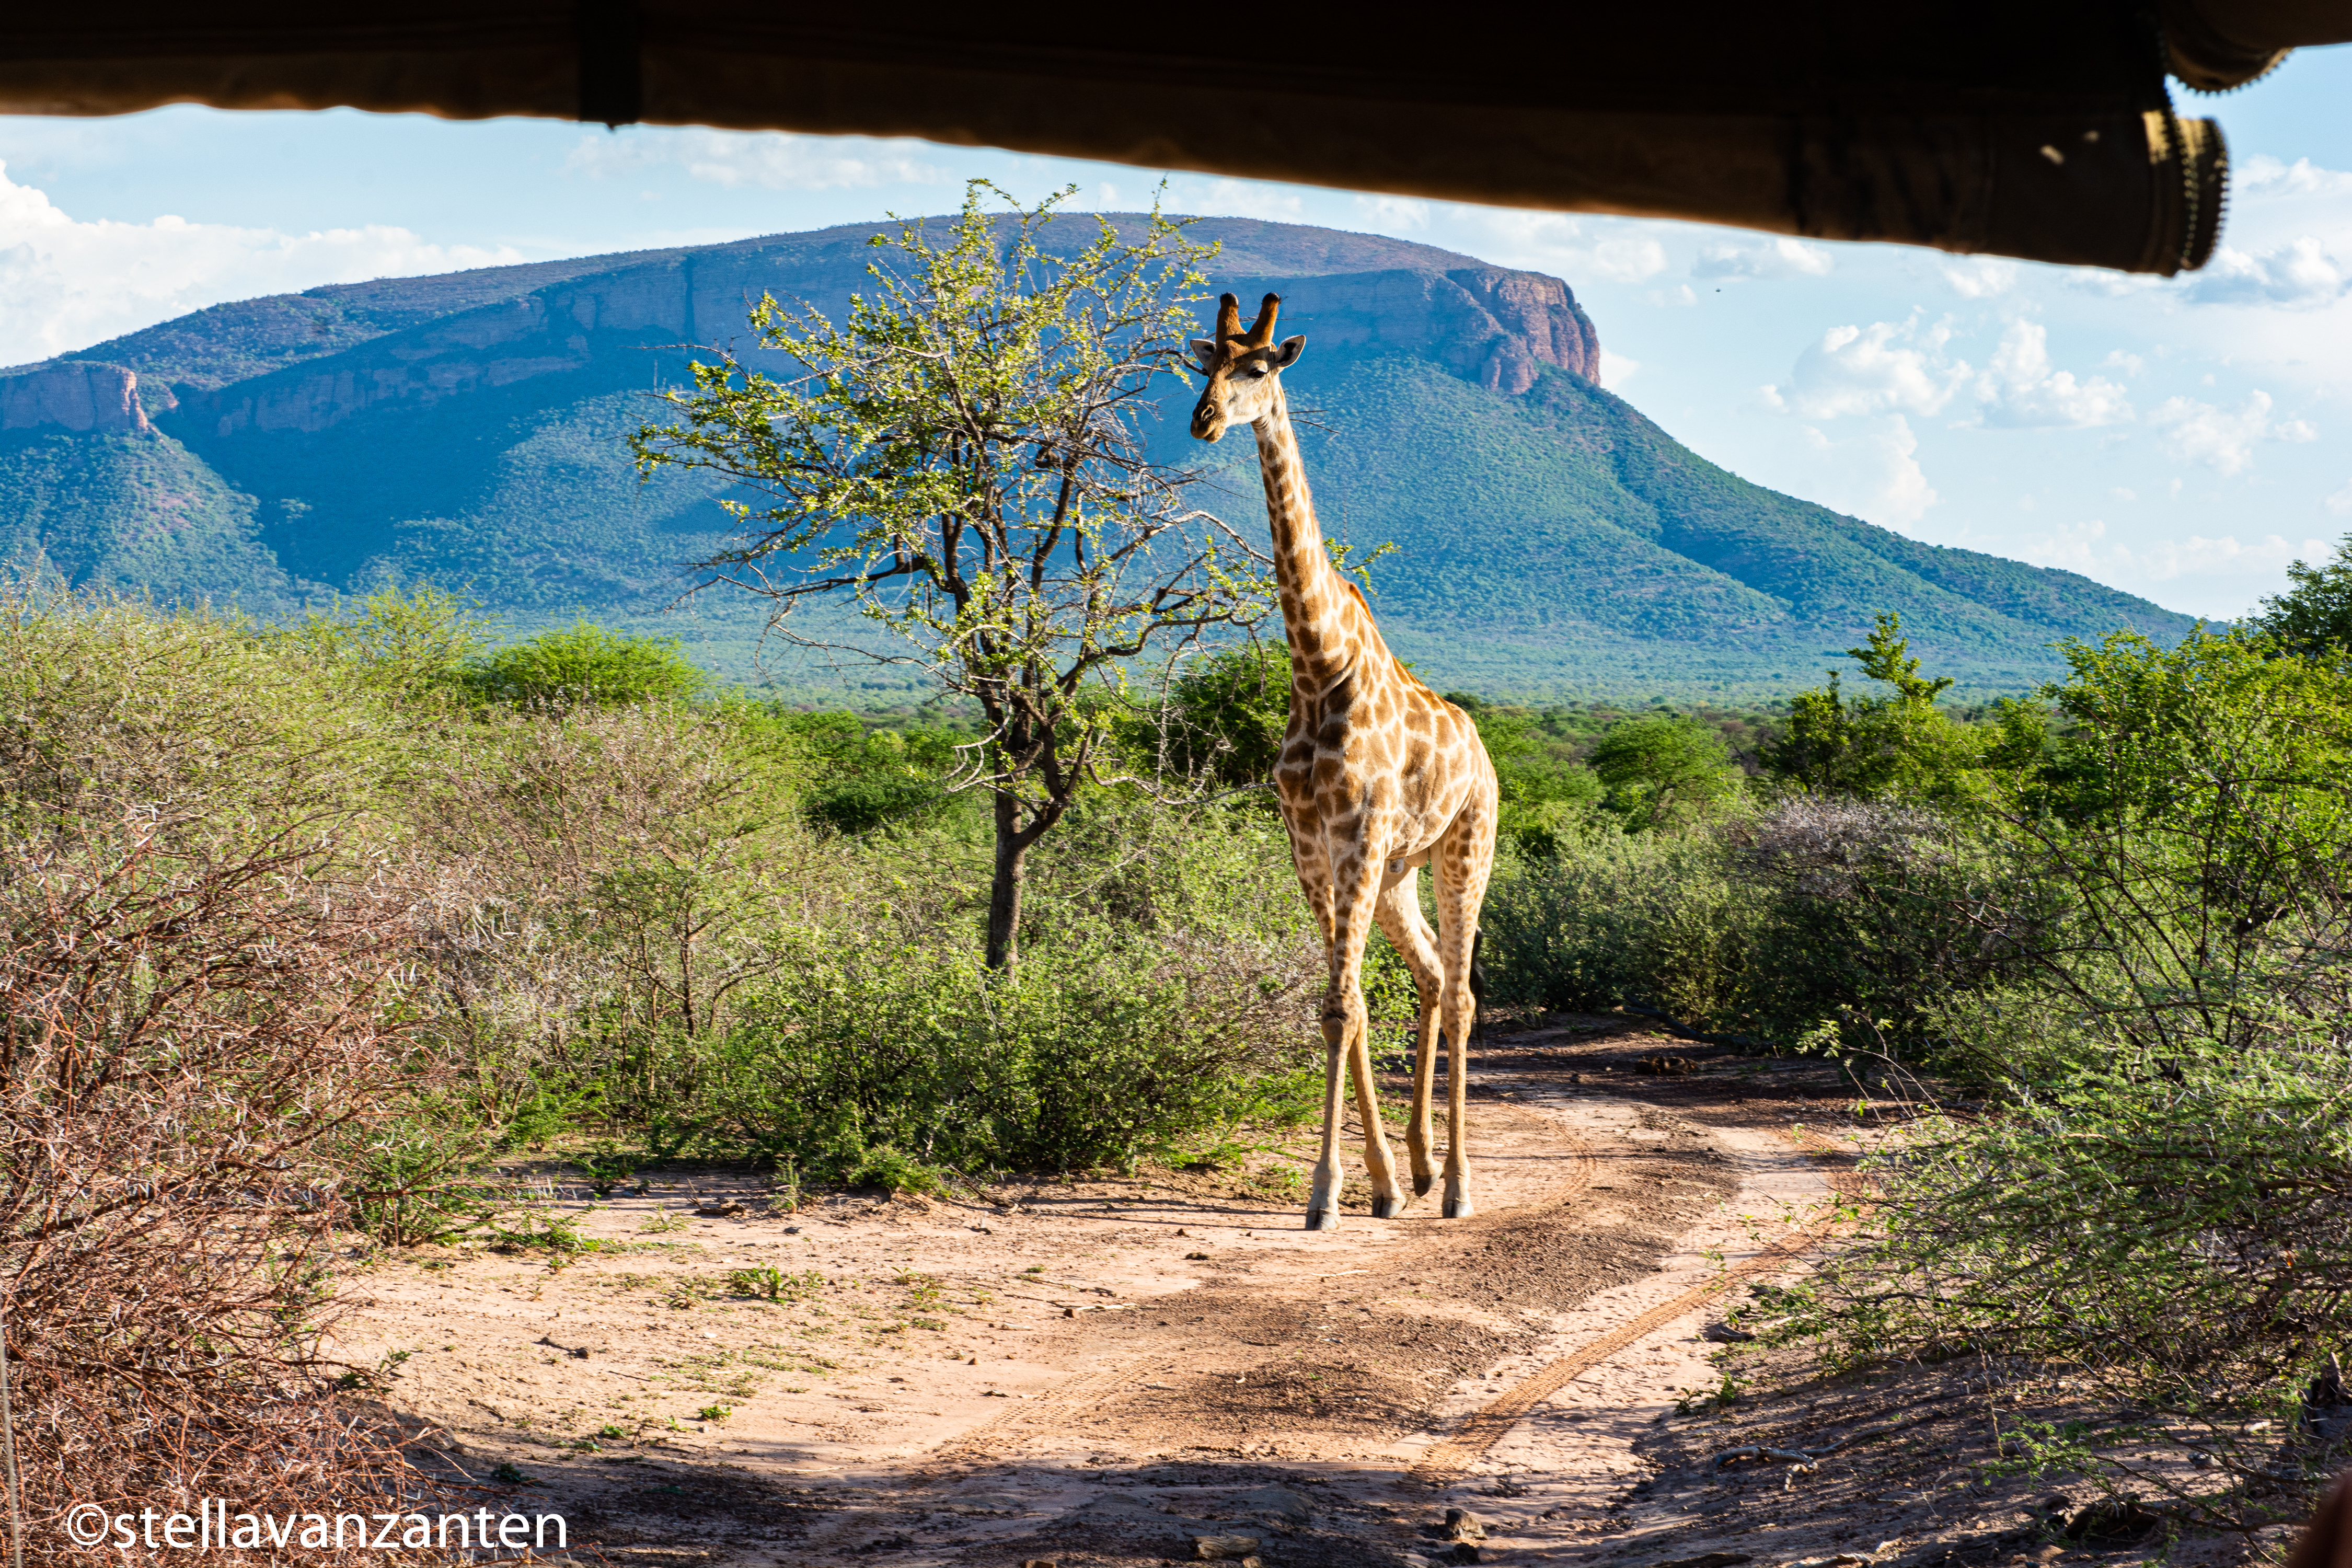 Giraffe standing very still when spotting the jeep